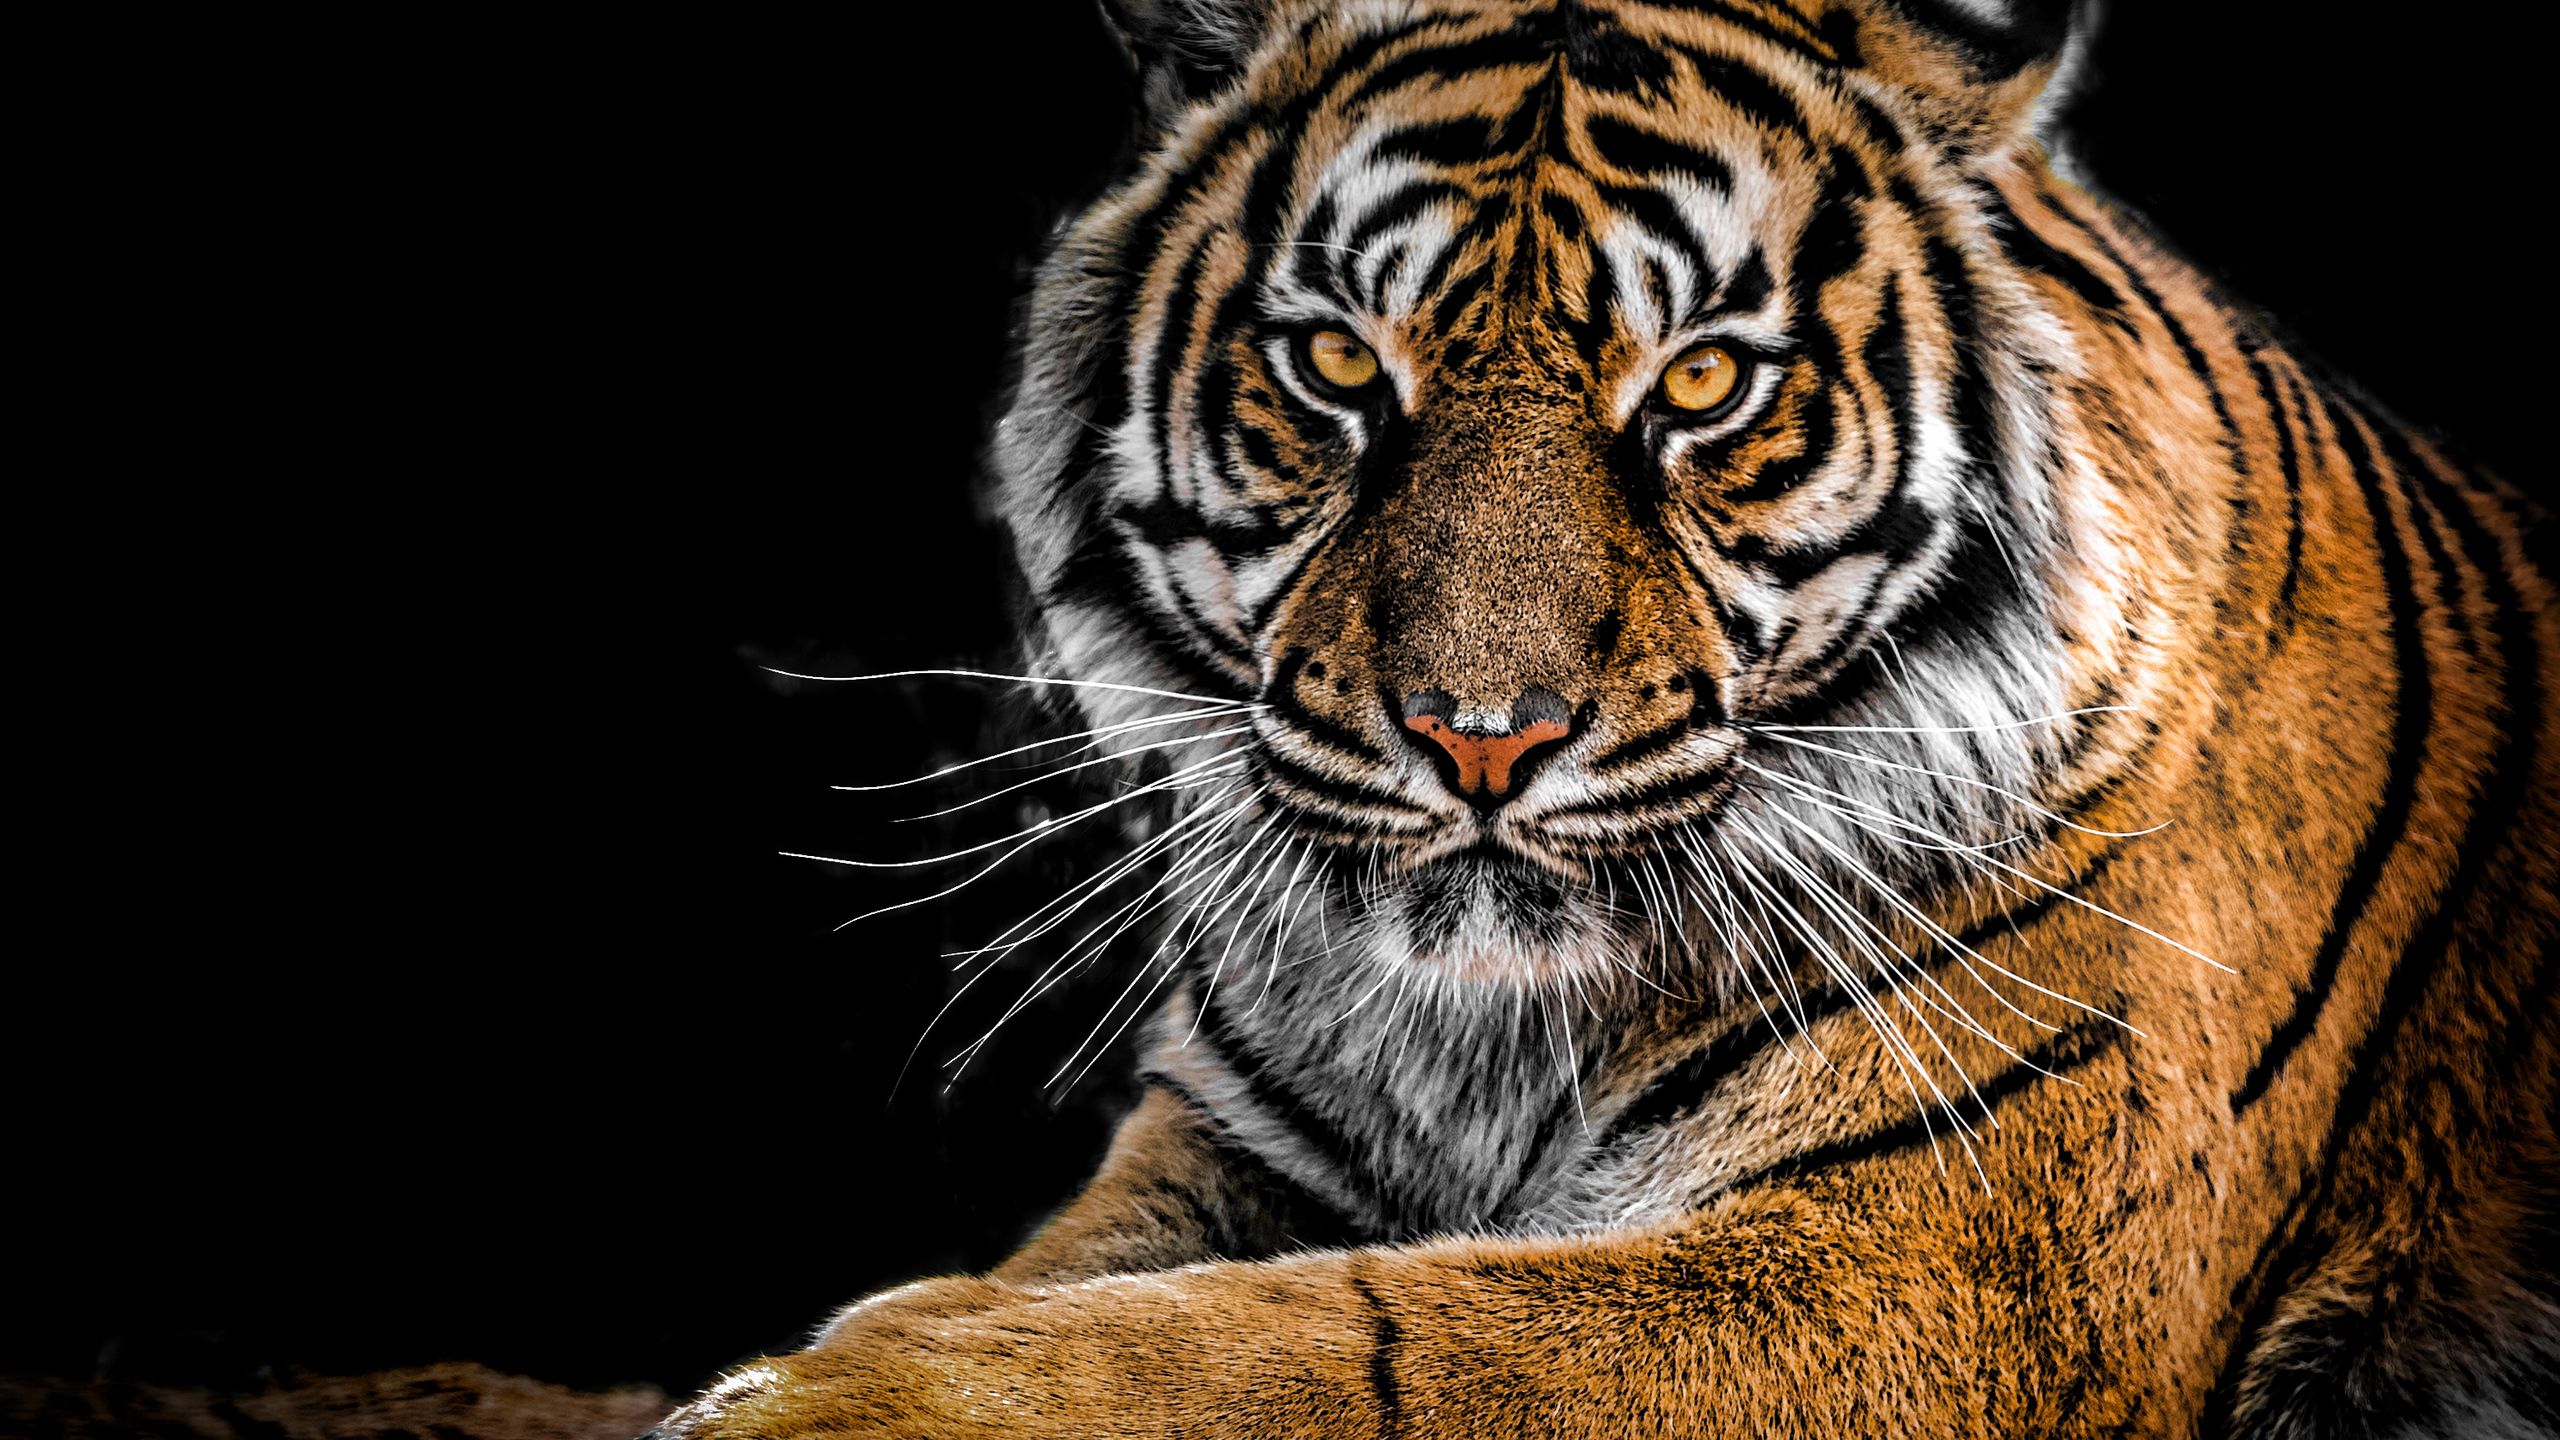 Tiger Closeup 1440P Resolution HD 4k Wallpaper, Image